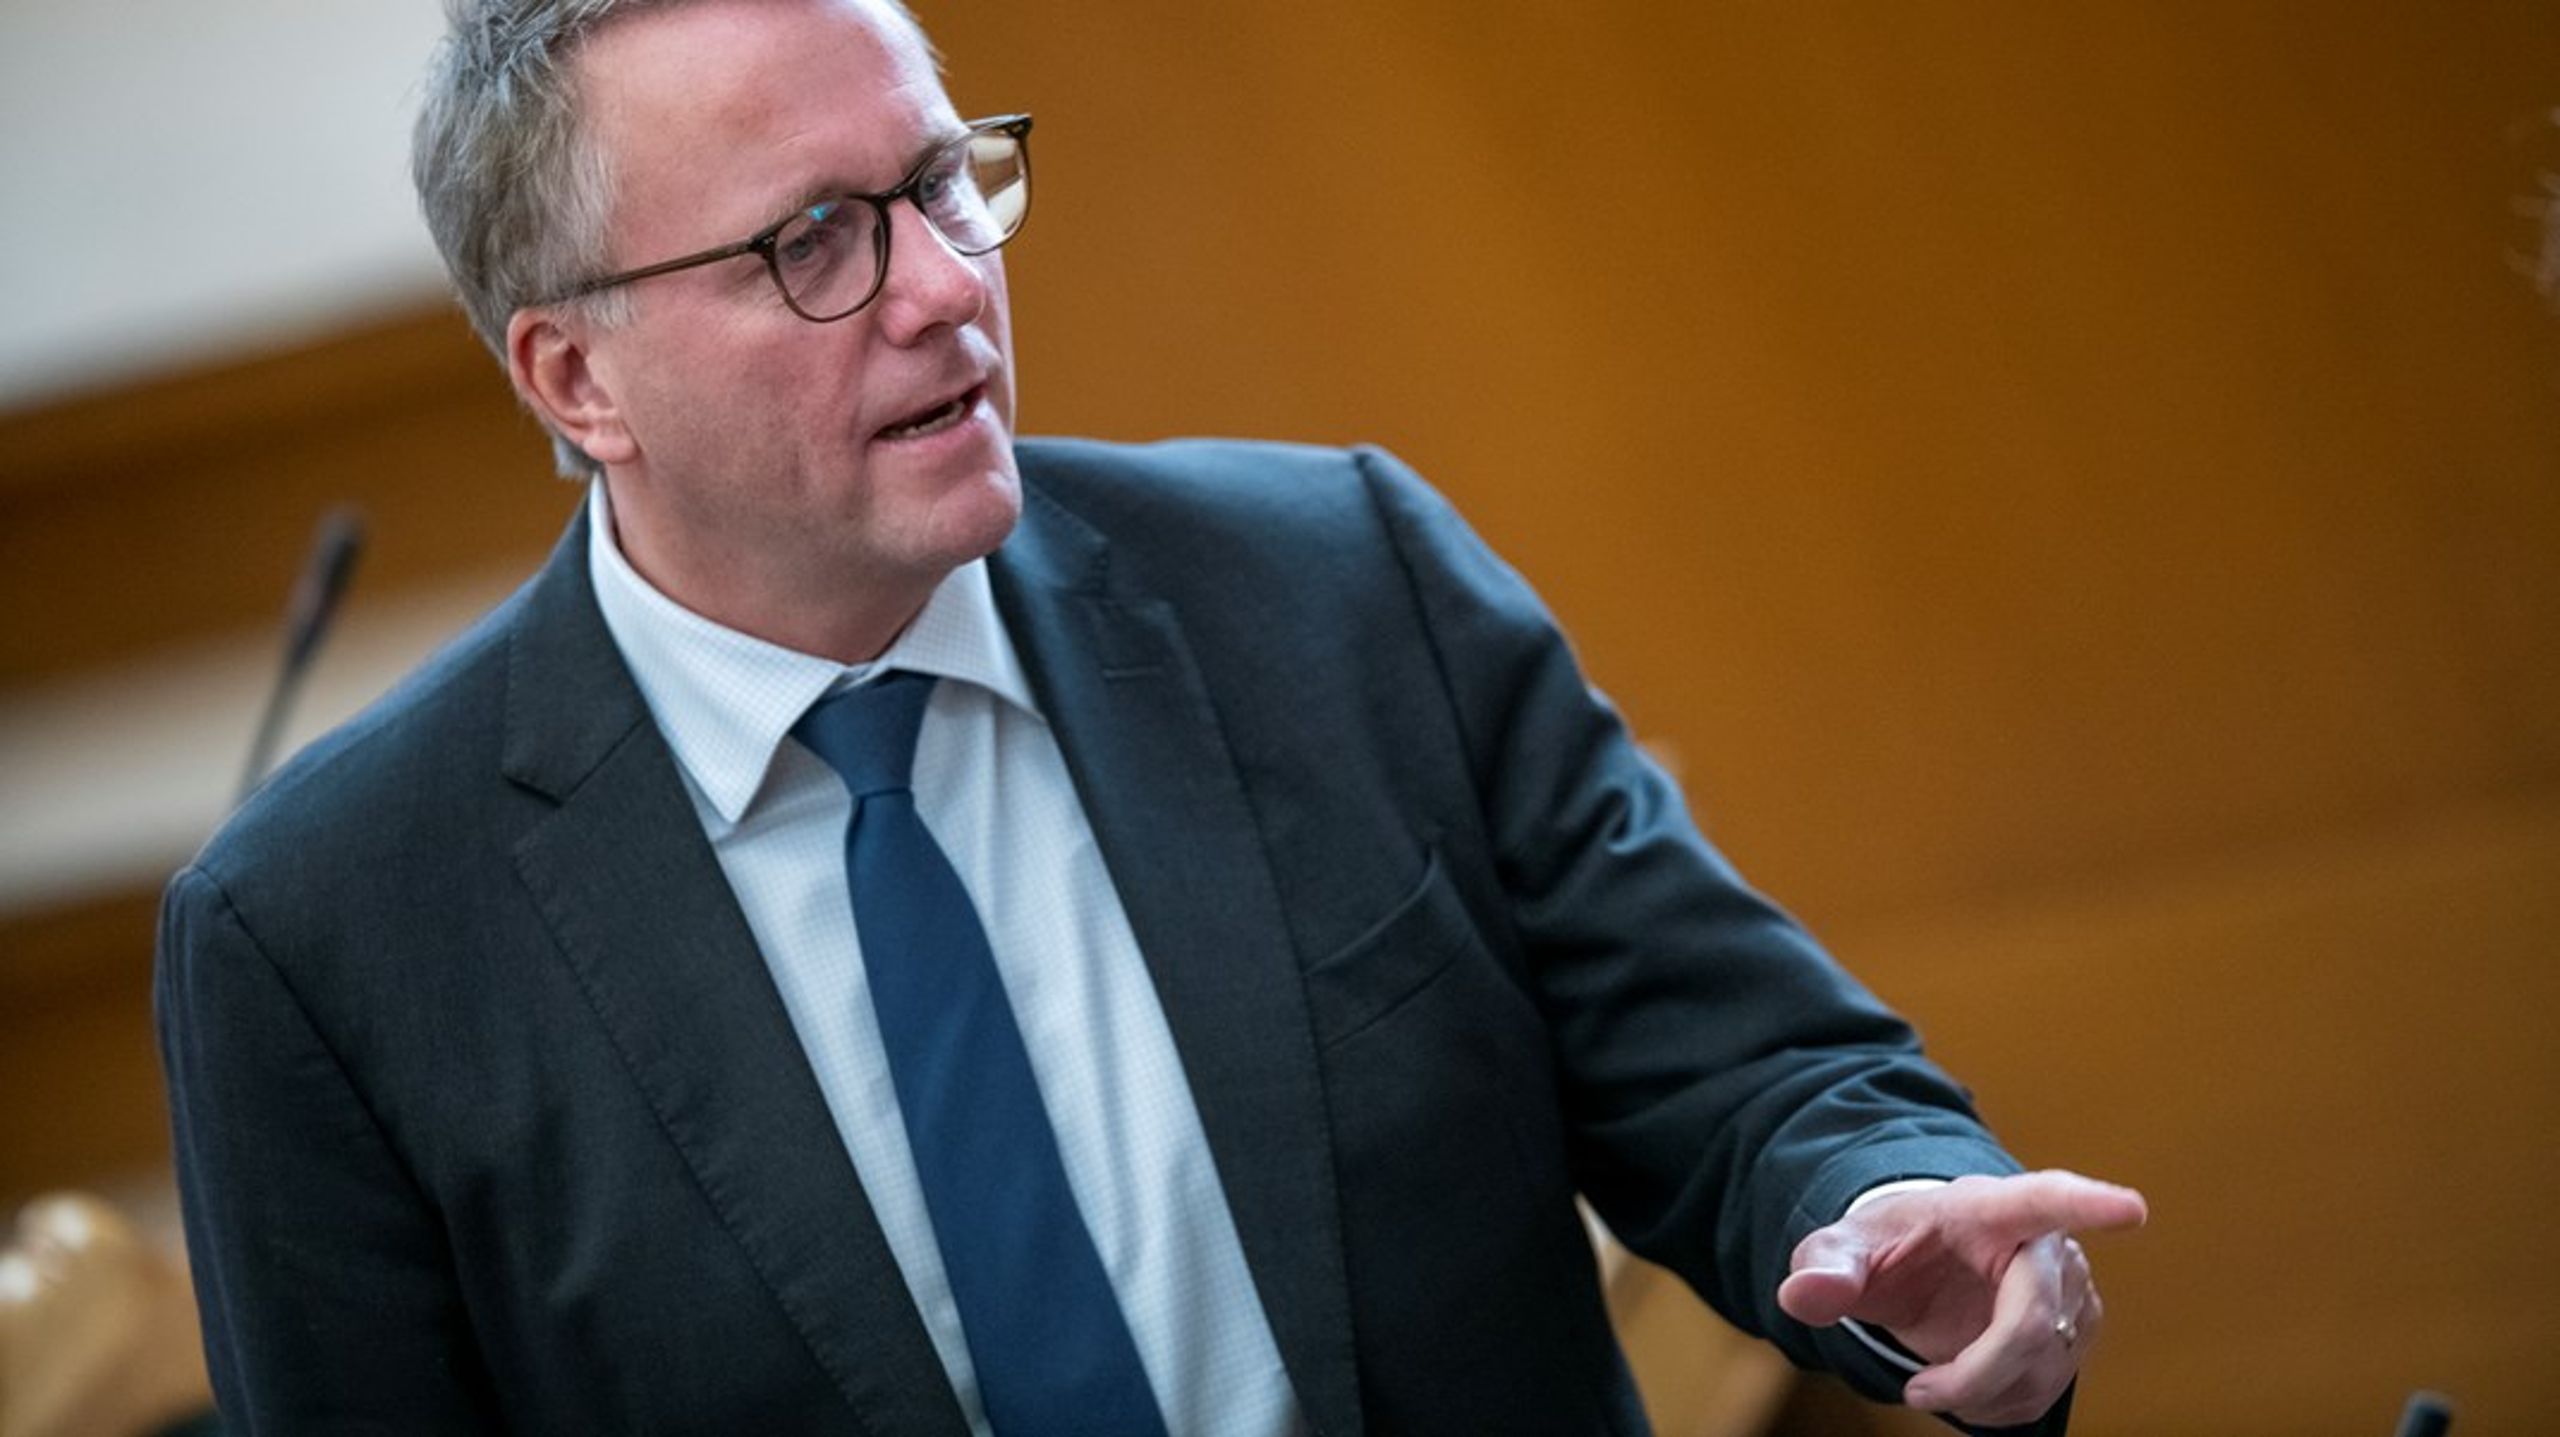 Skatteminister Morten Bødskov (S) kalder den nye aftale om international selskabsskat for "historisk".